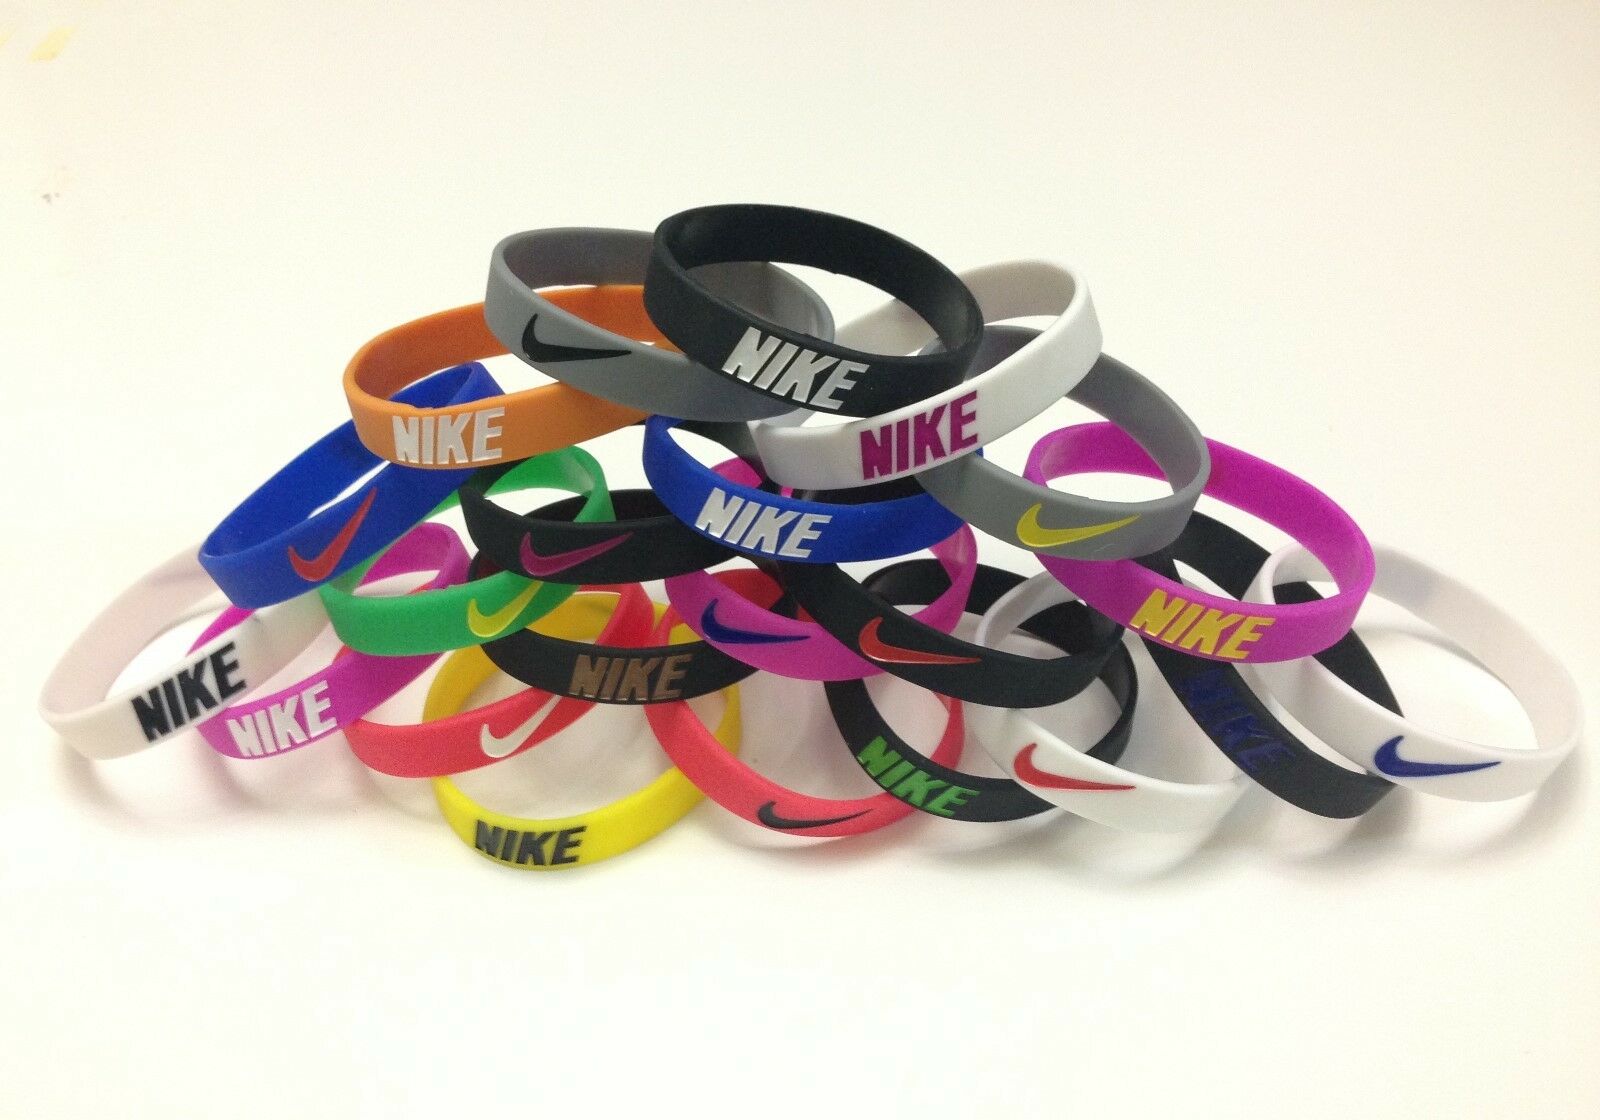 Nike Sport Baller Band Silicone Rubber Bracelet Wristband